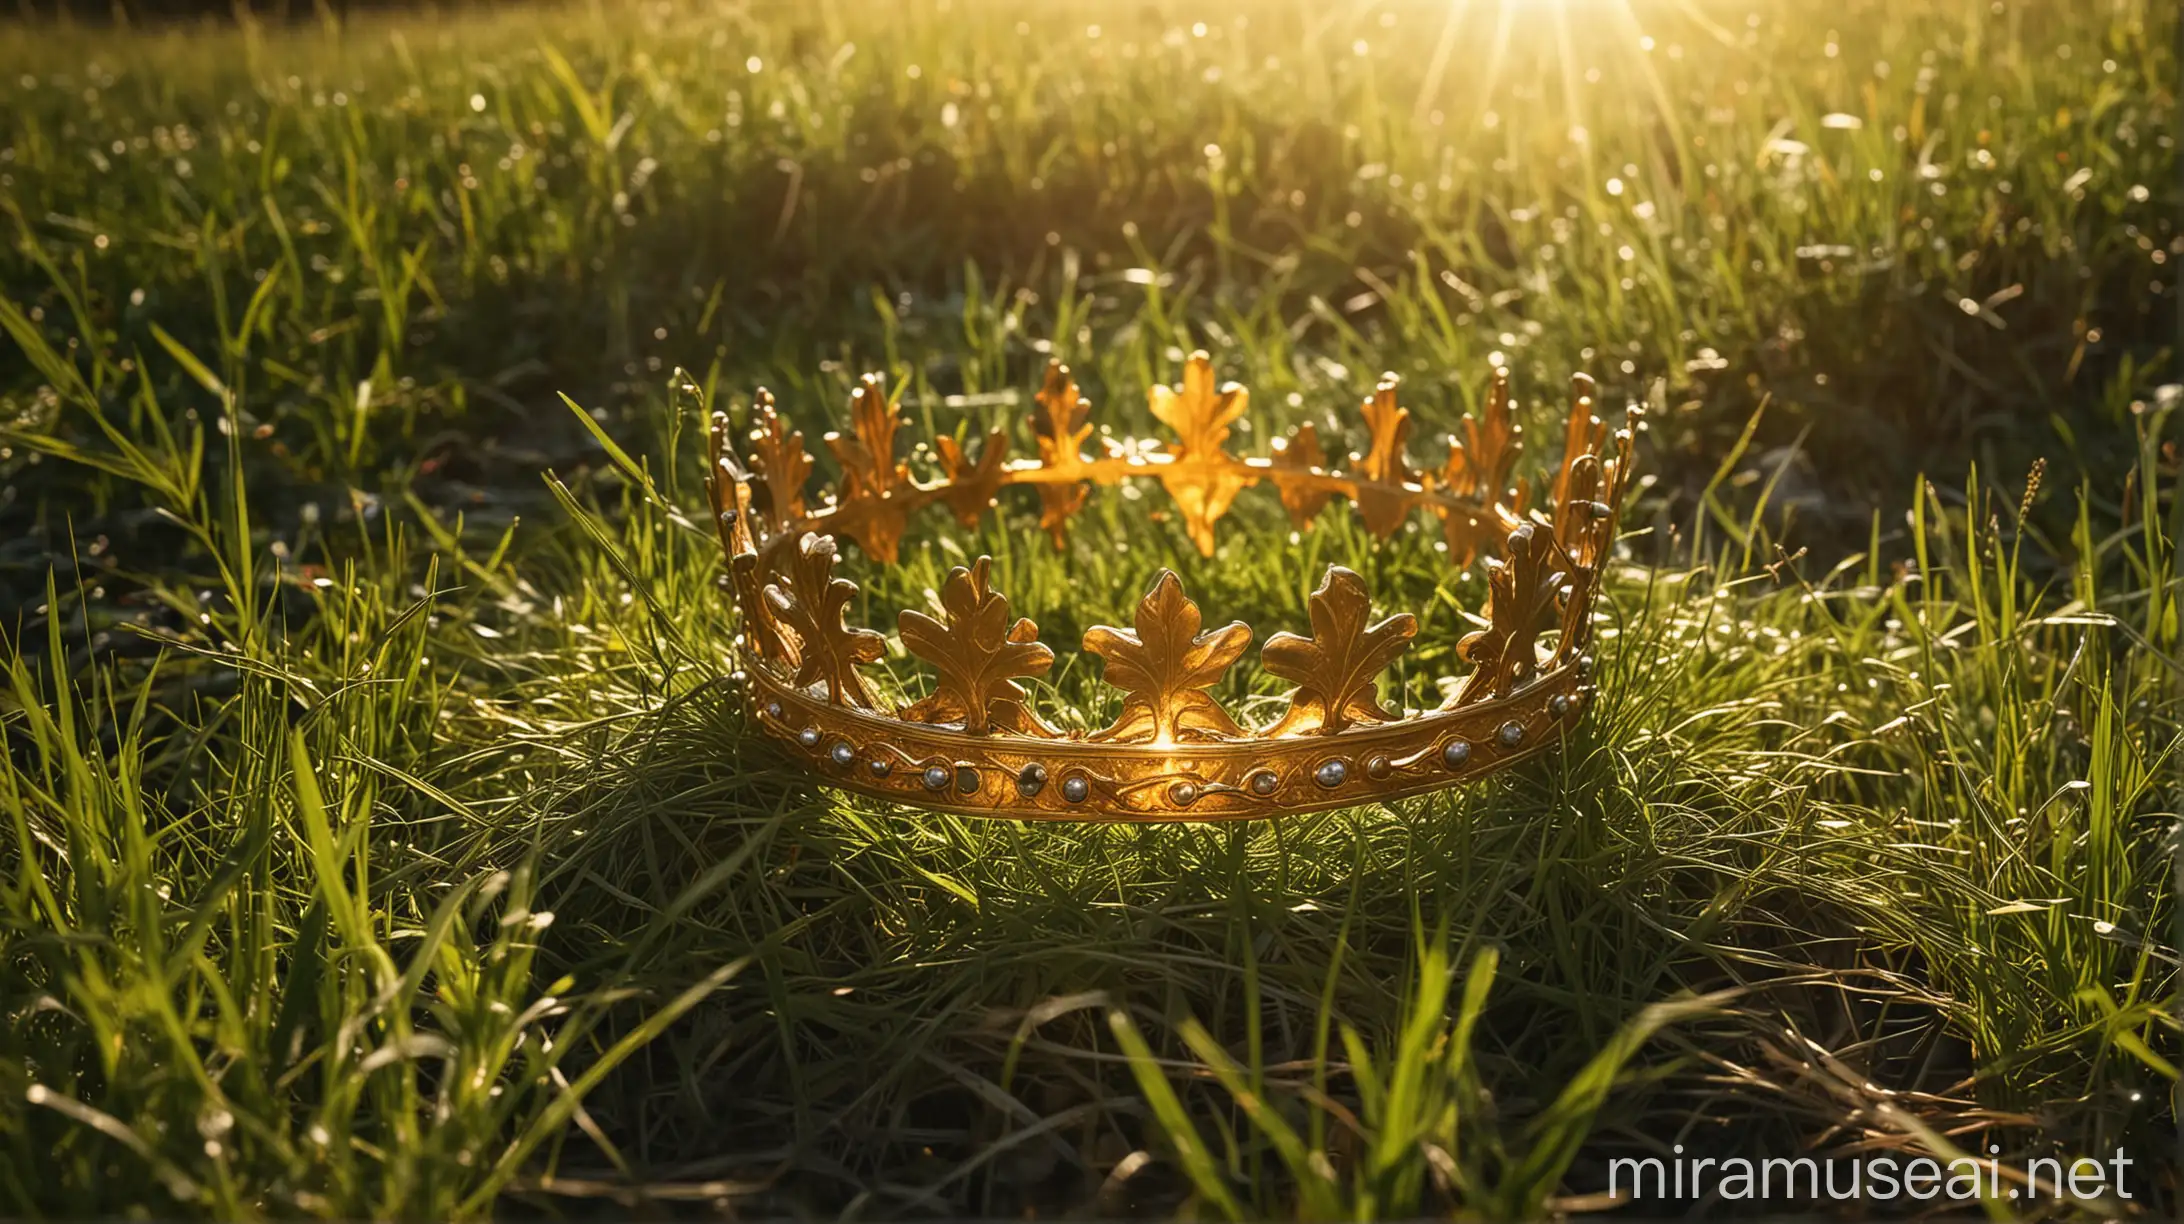 golden crown lying in grass sunlight